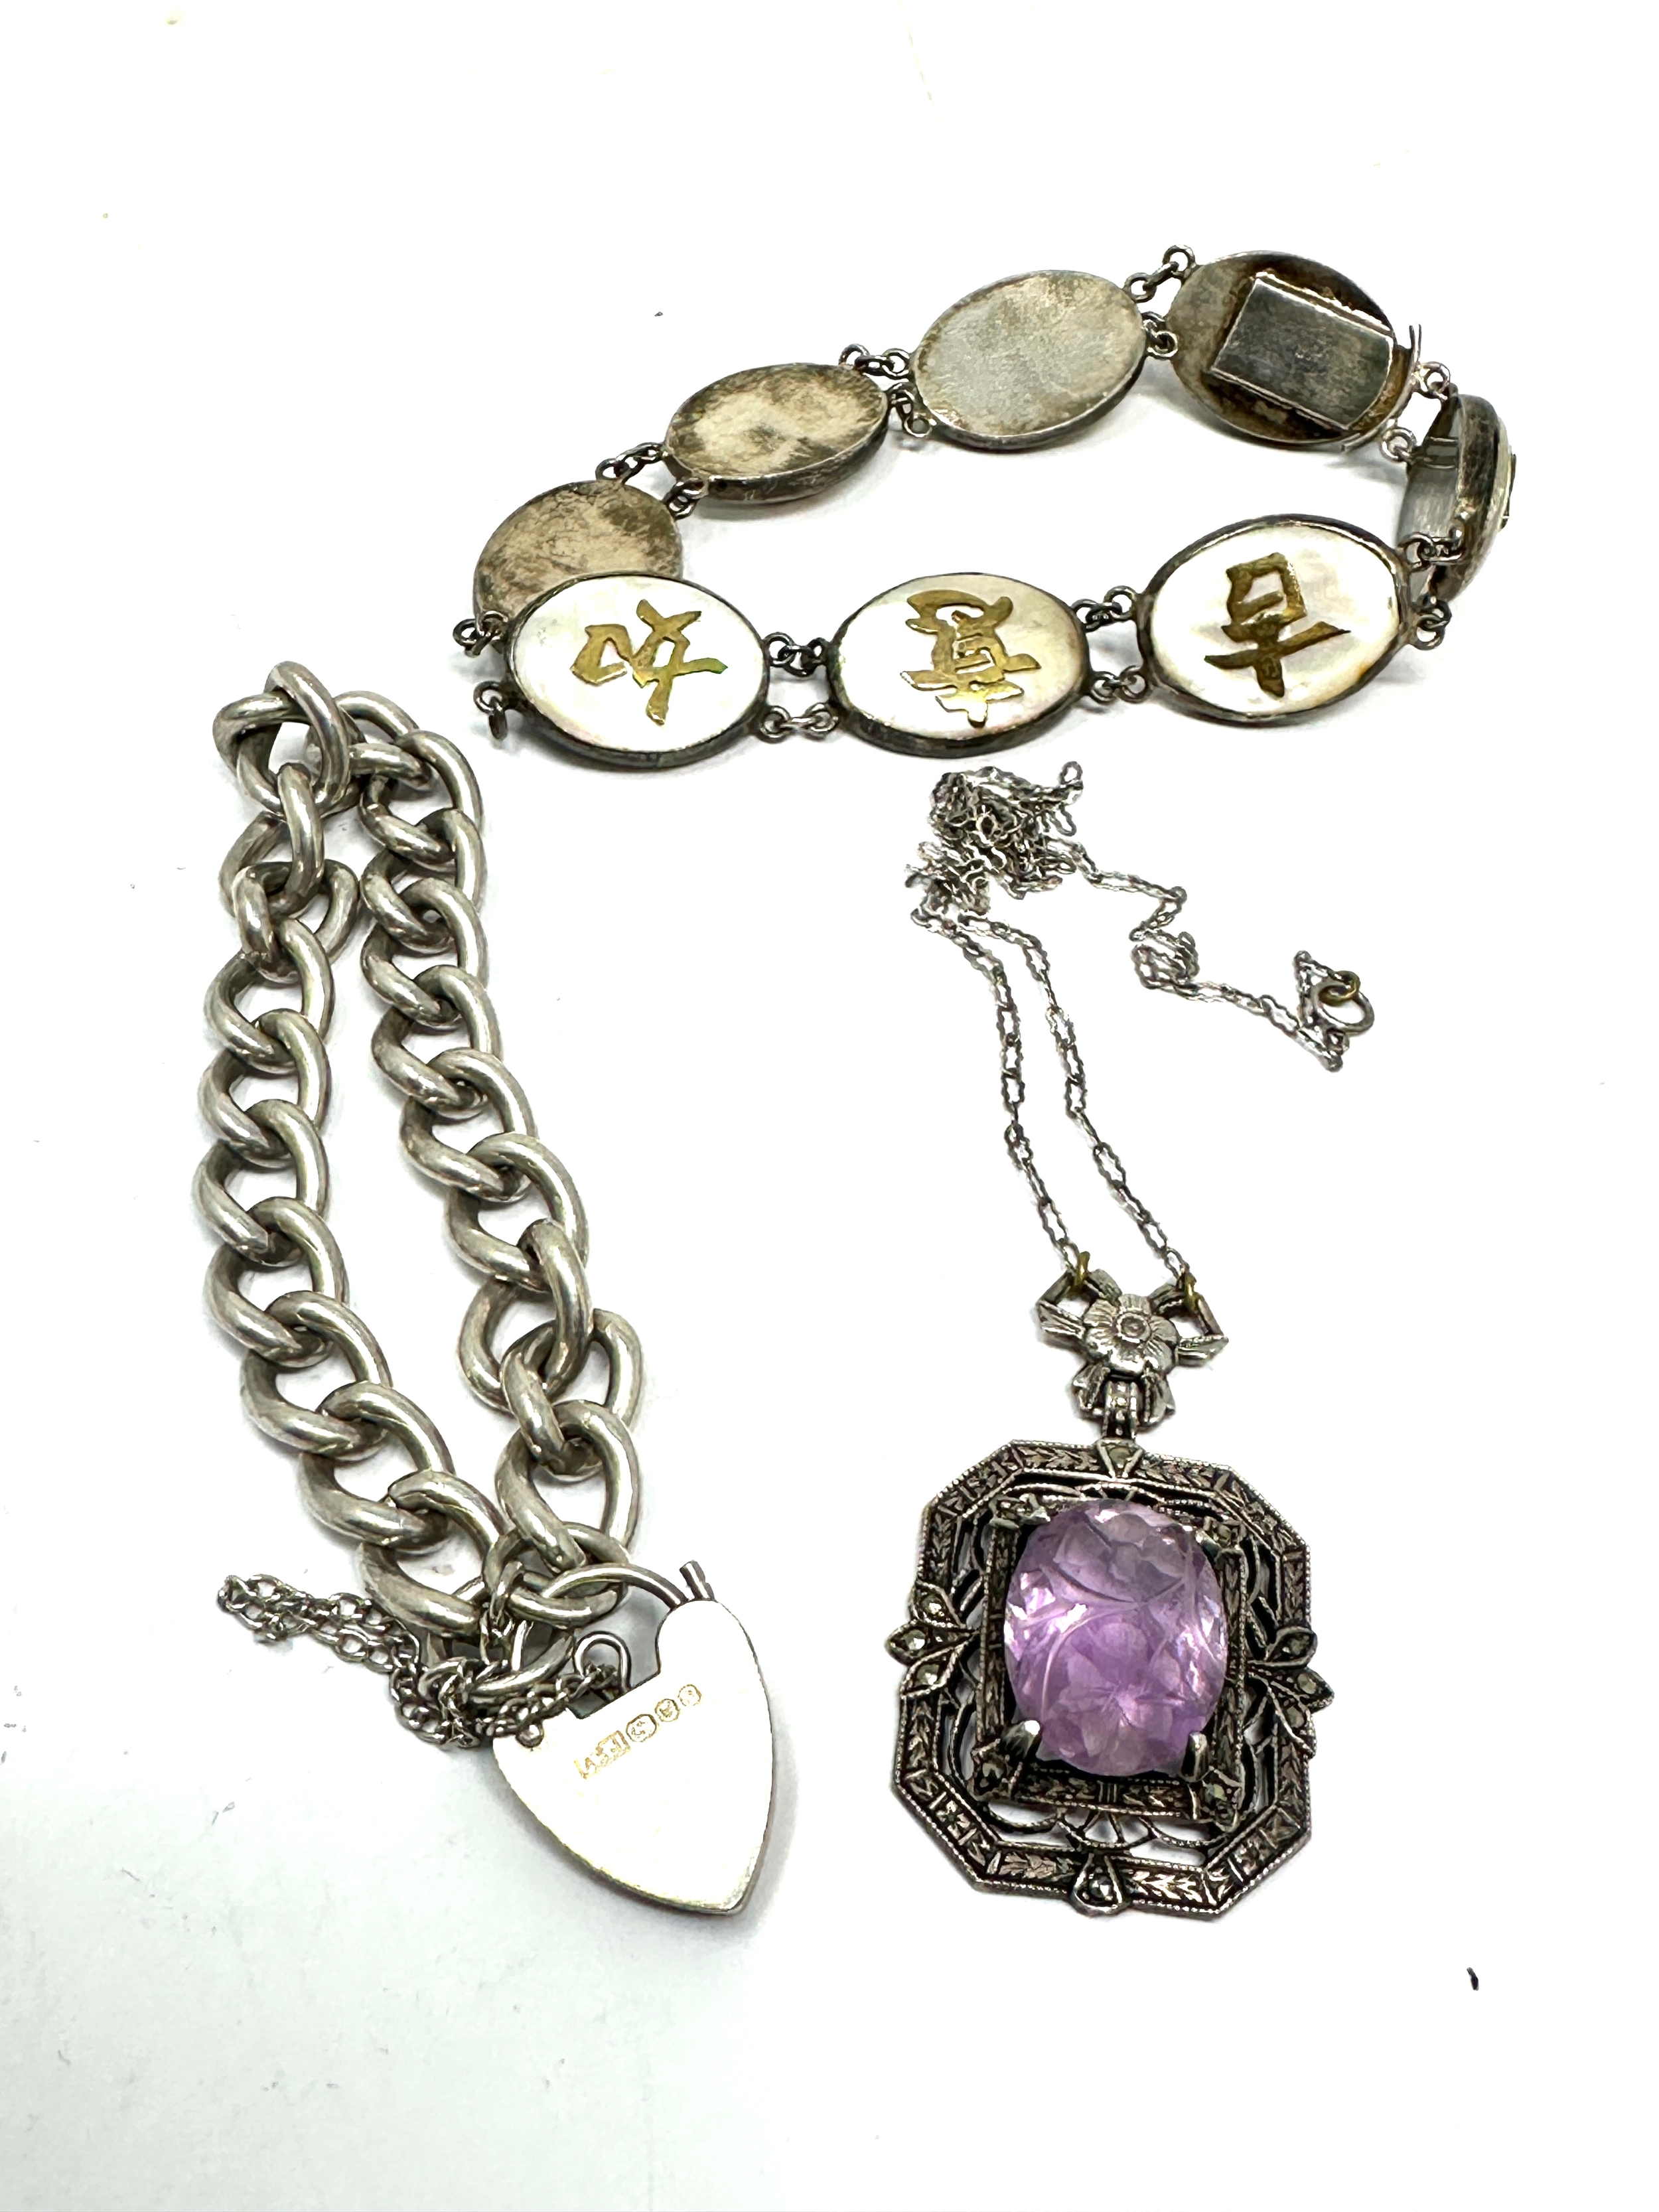 Vintage silver jewellery inc charm bracelet amethyst pendant chinese mop bracelet weight 56g